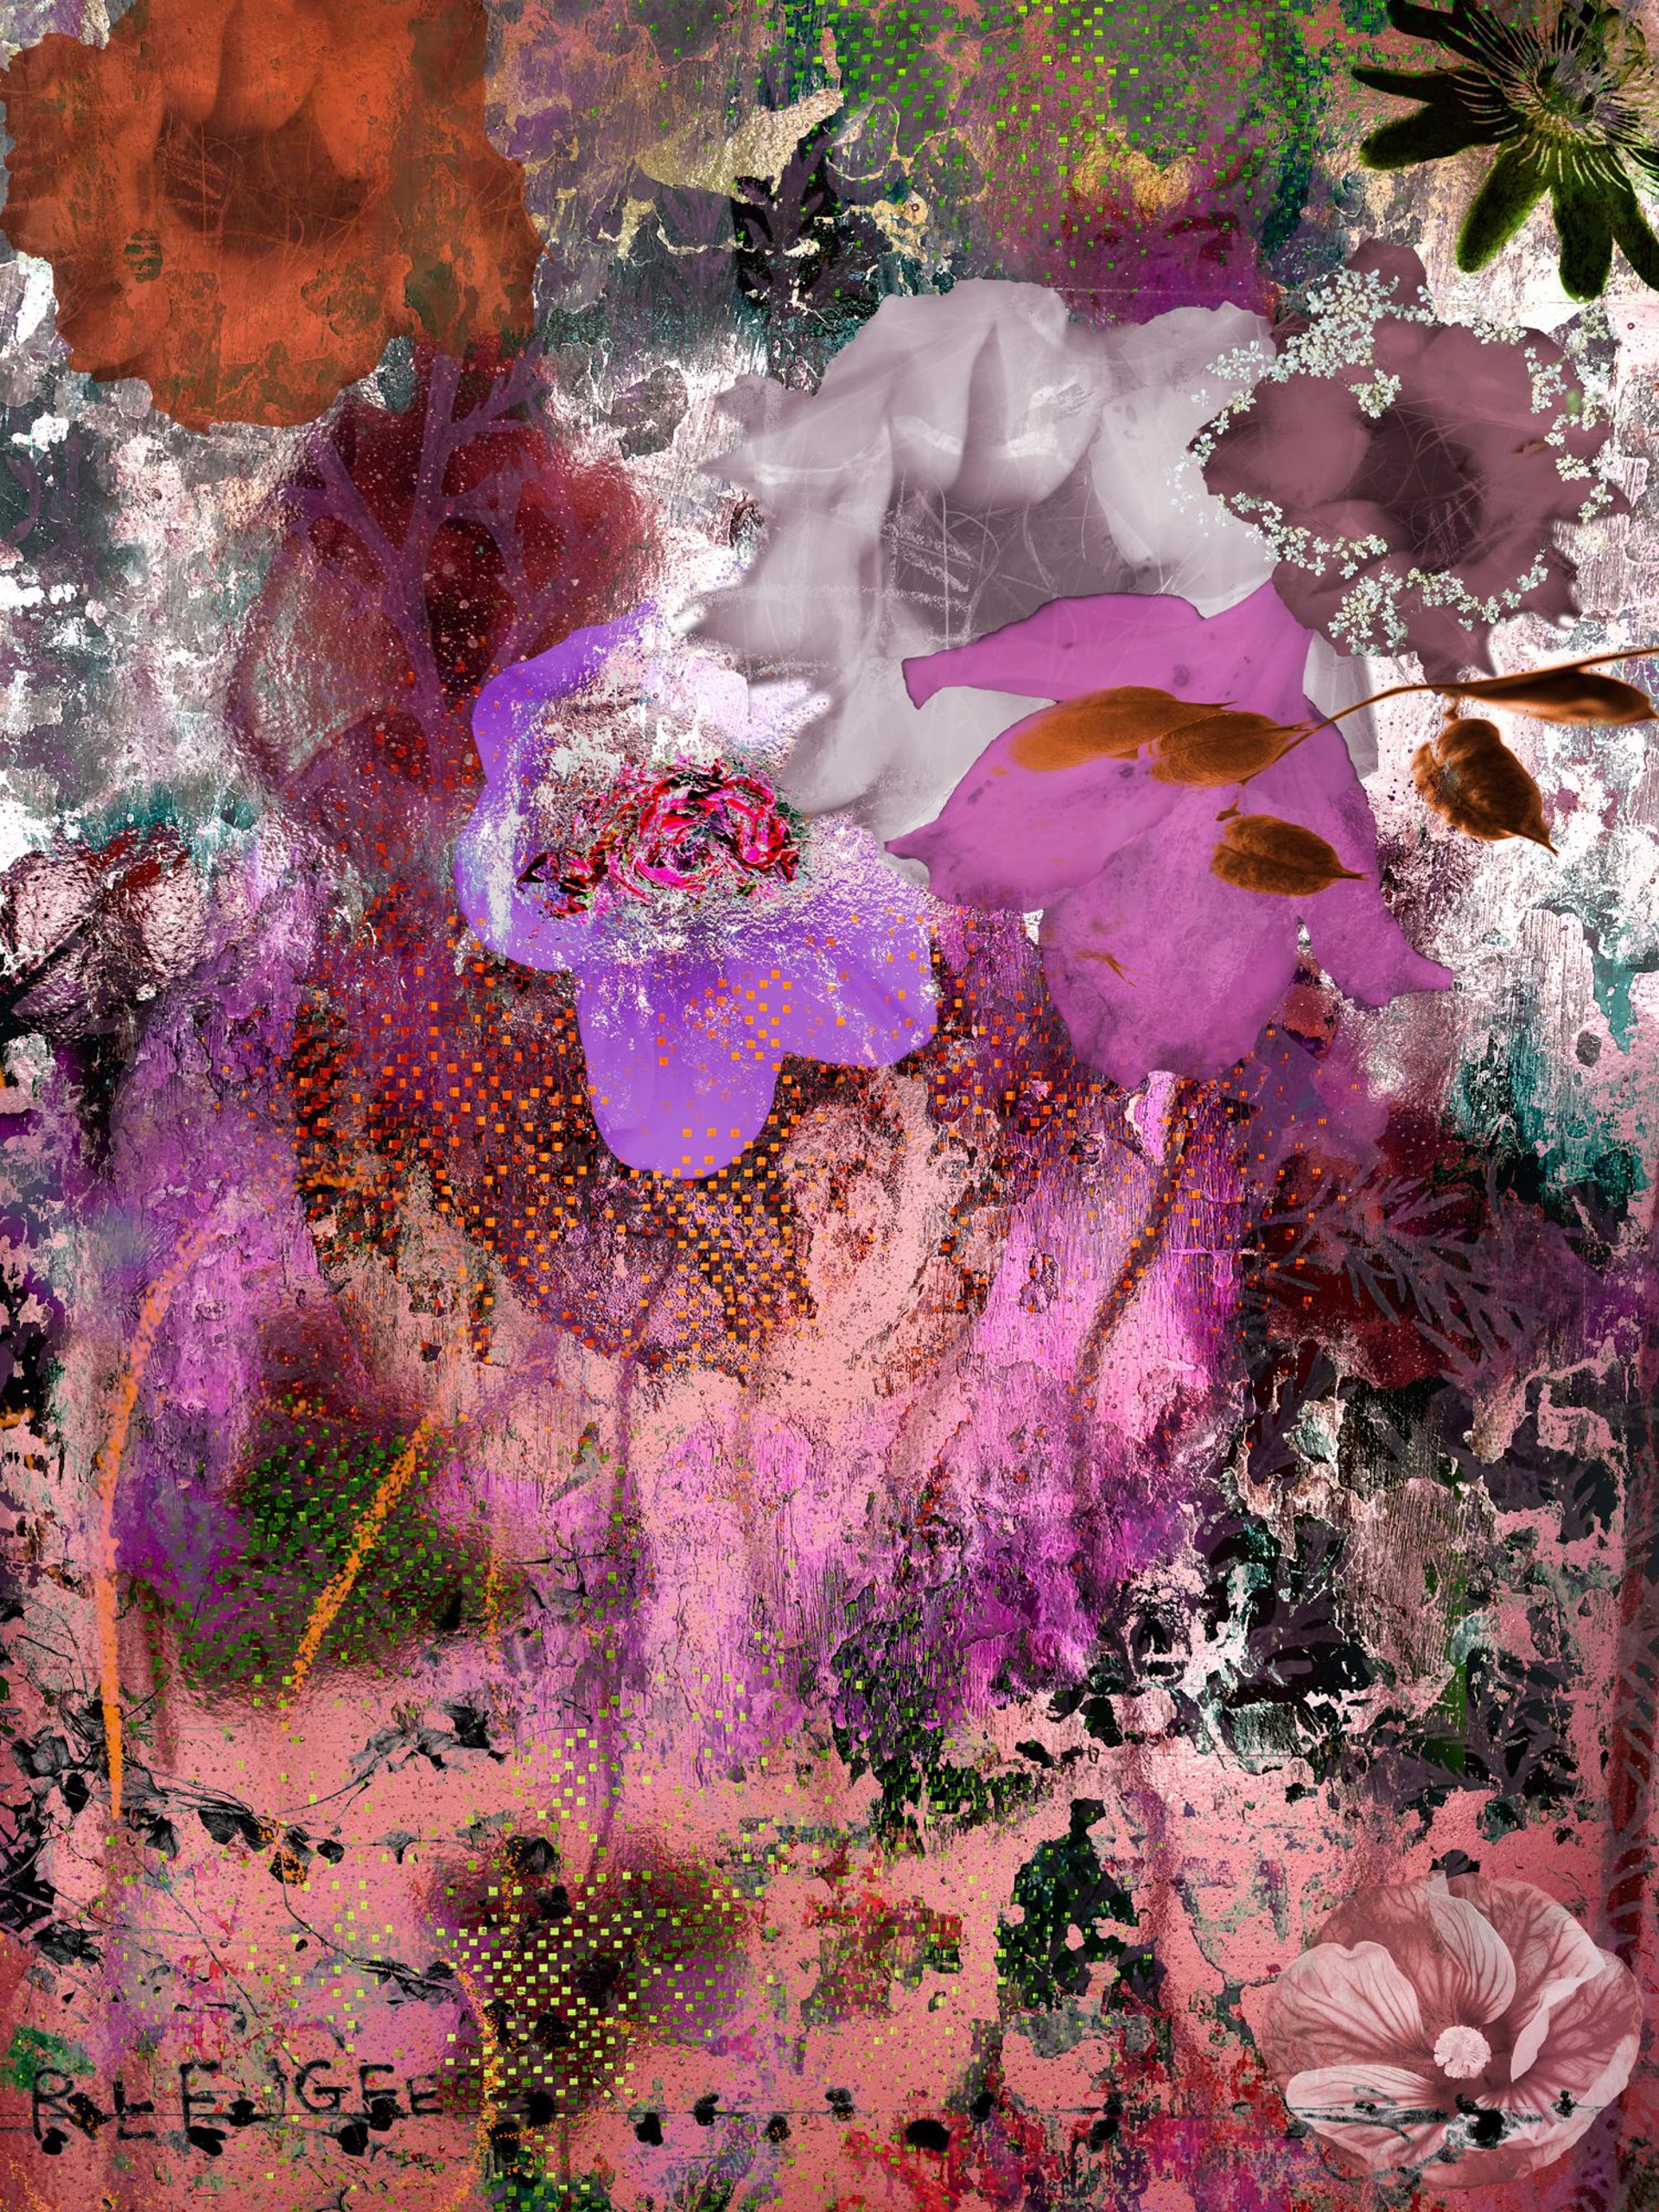 FLOWERS SERIES I NO. 4 by CAROL EISENBERG